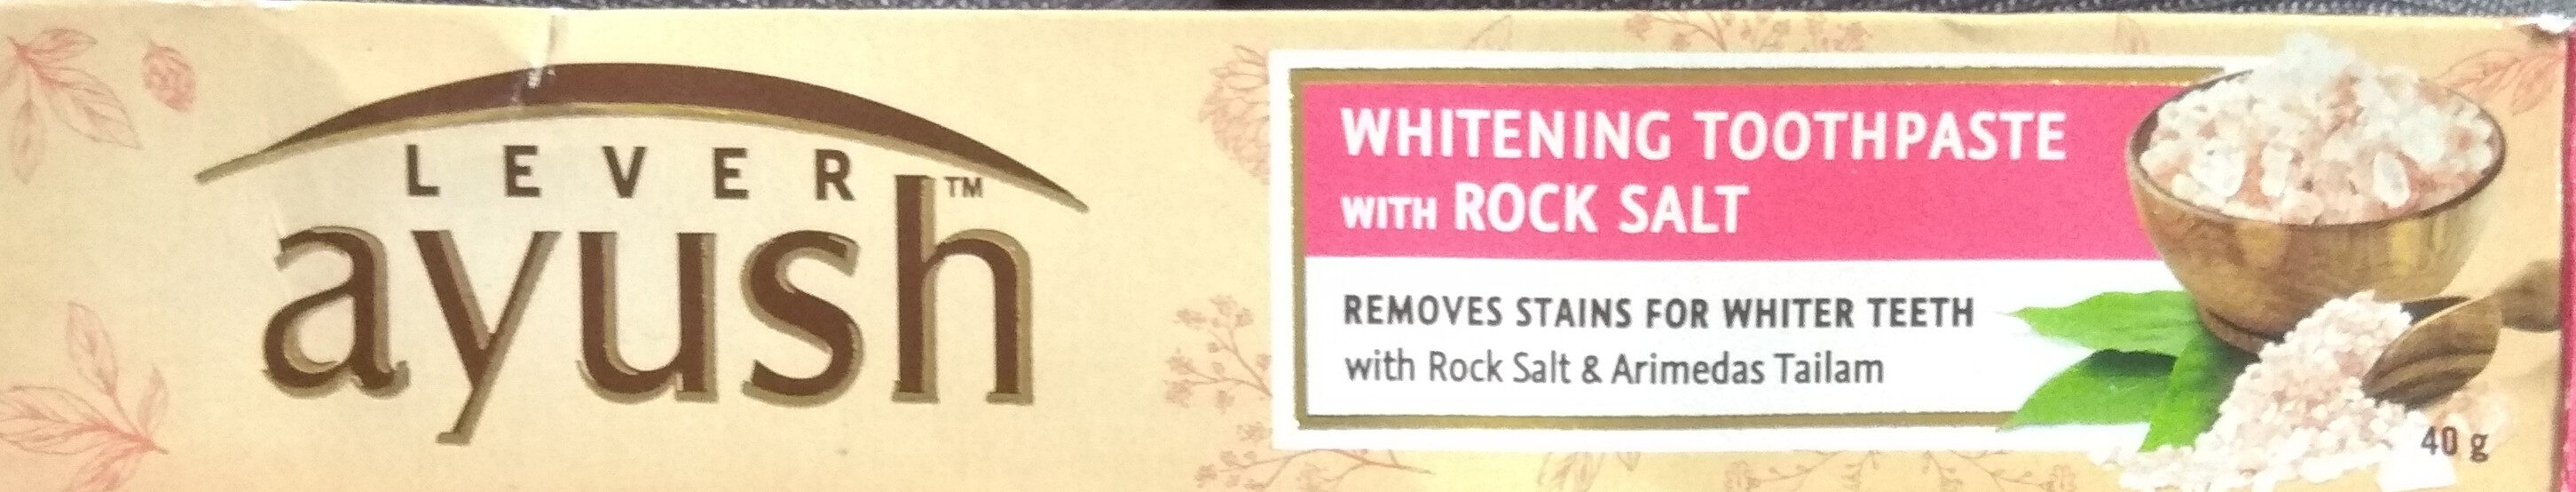 Whitening Toothpaste with rock salt - Produit - en